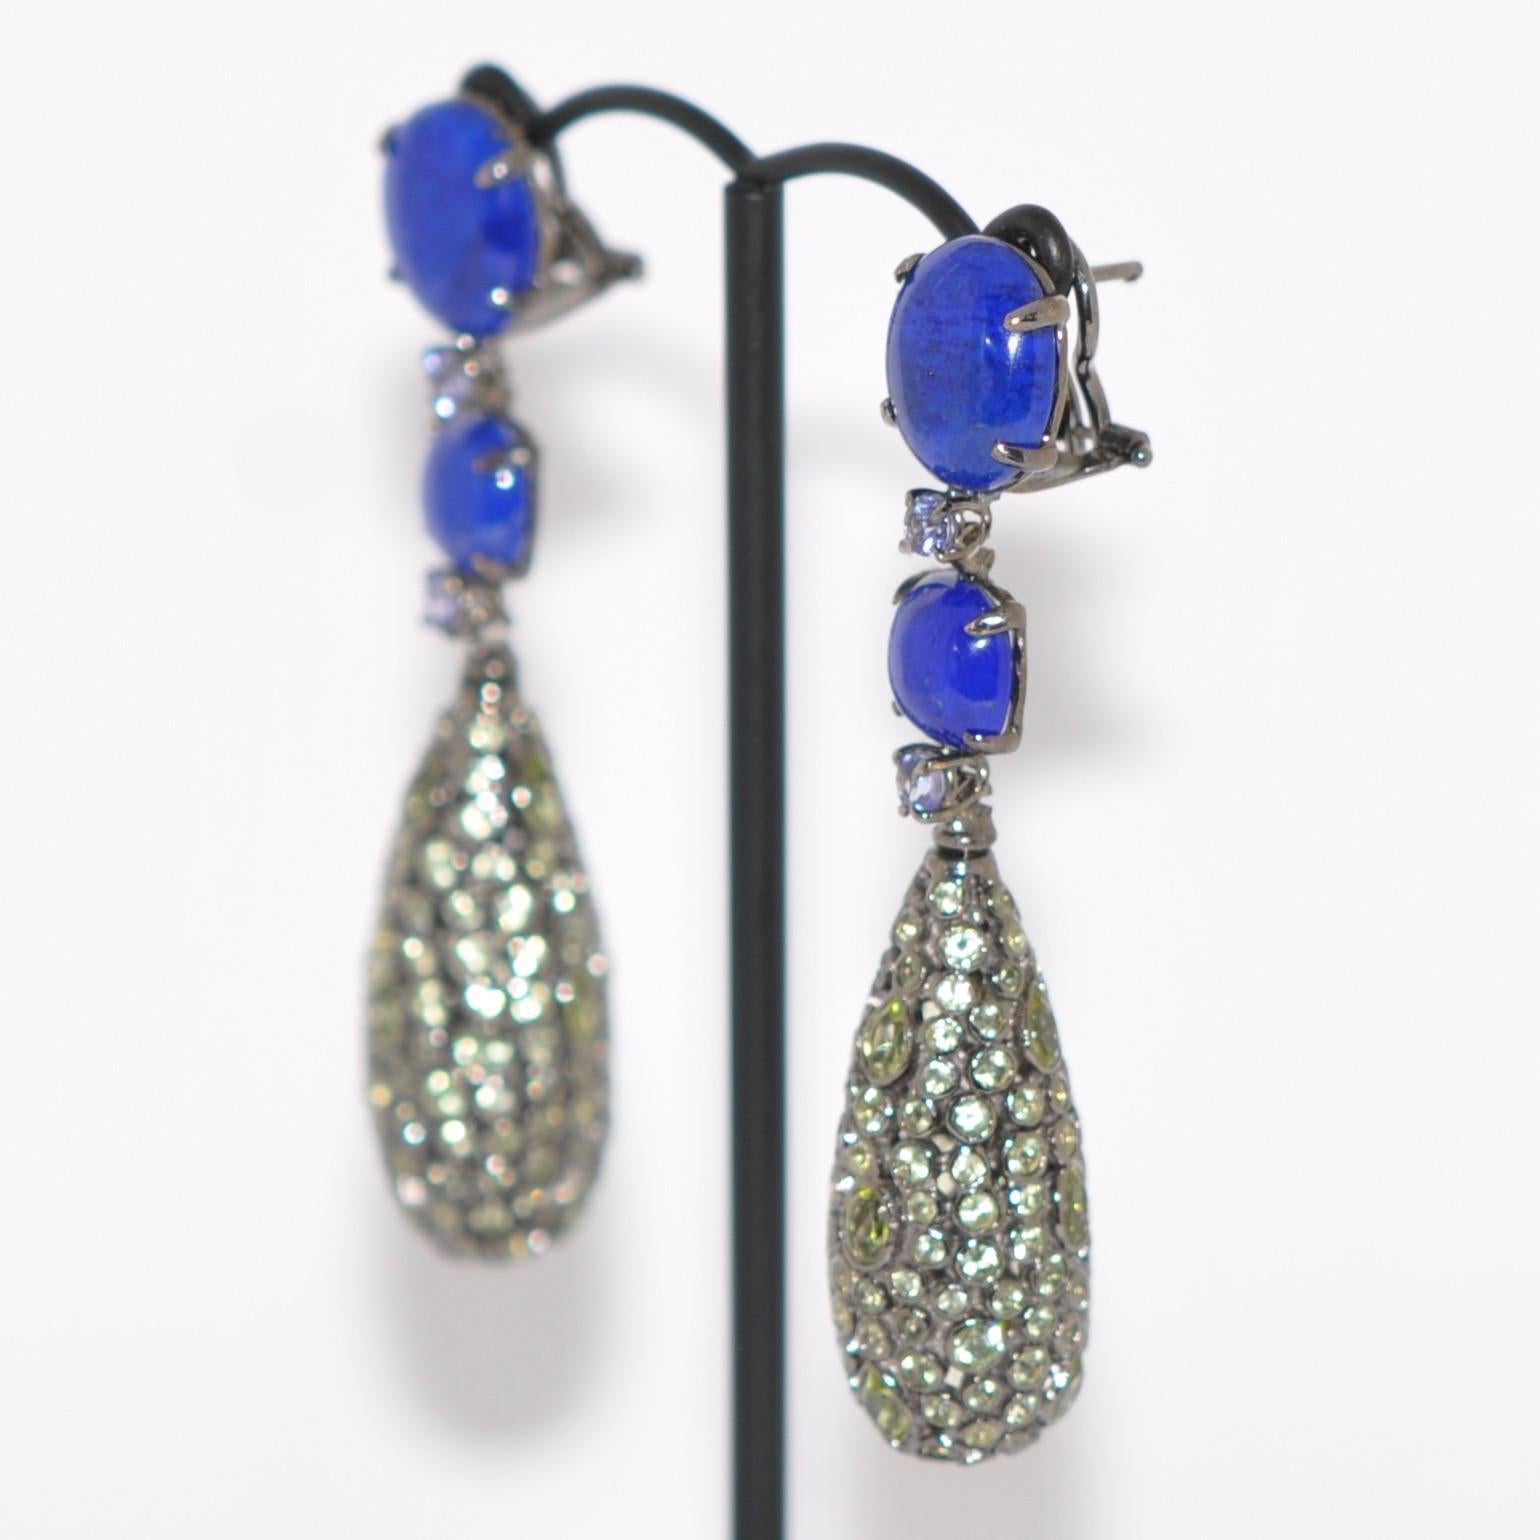 Lapis Lazuli, Tanzanite and Peridot on Black Gold 18 Karat Chandelier Earrings.
Lapis Lazuli
Tanzanite
Peridot
Black Gold 18K